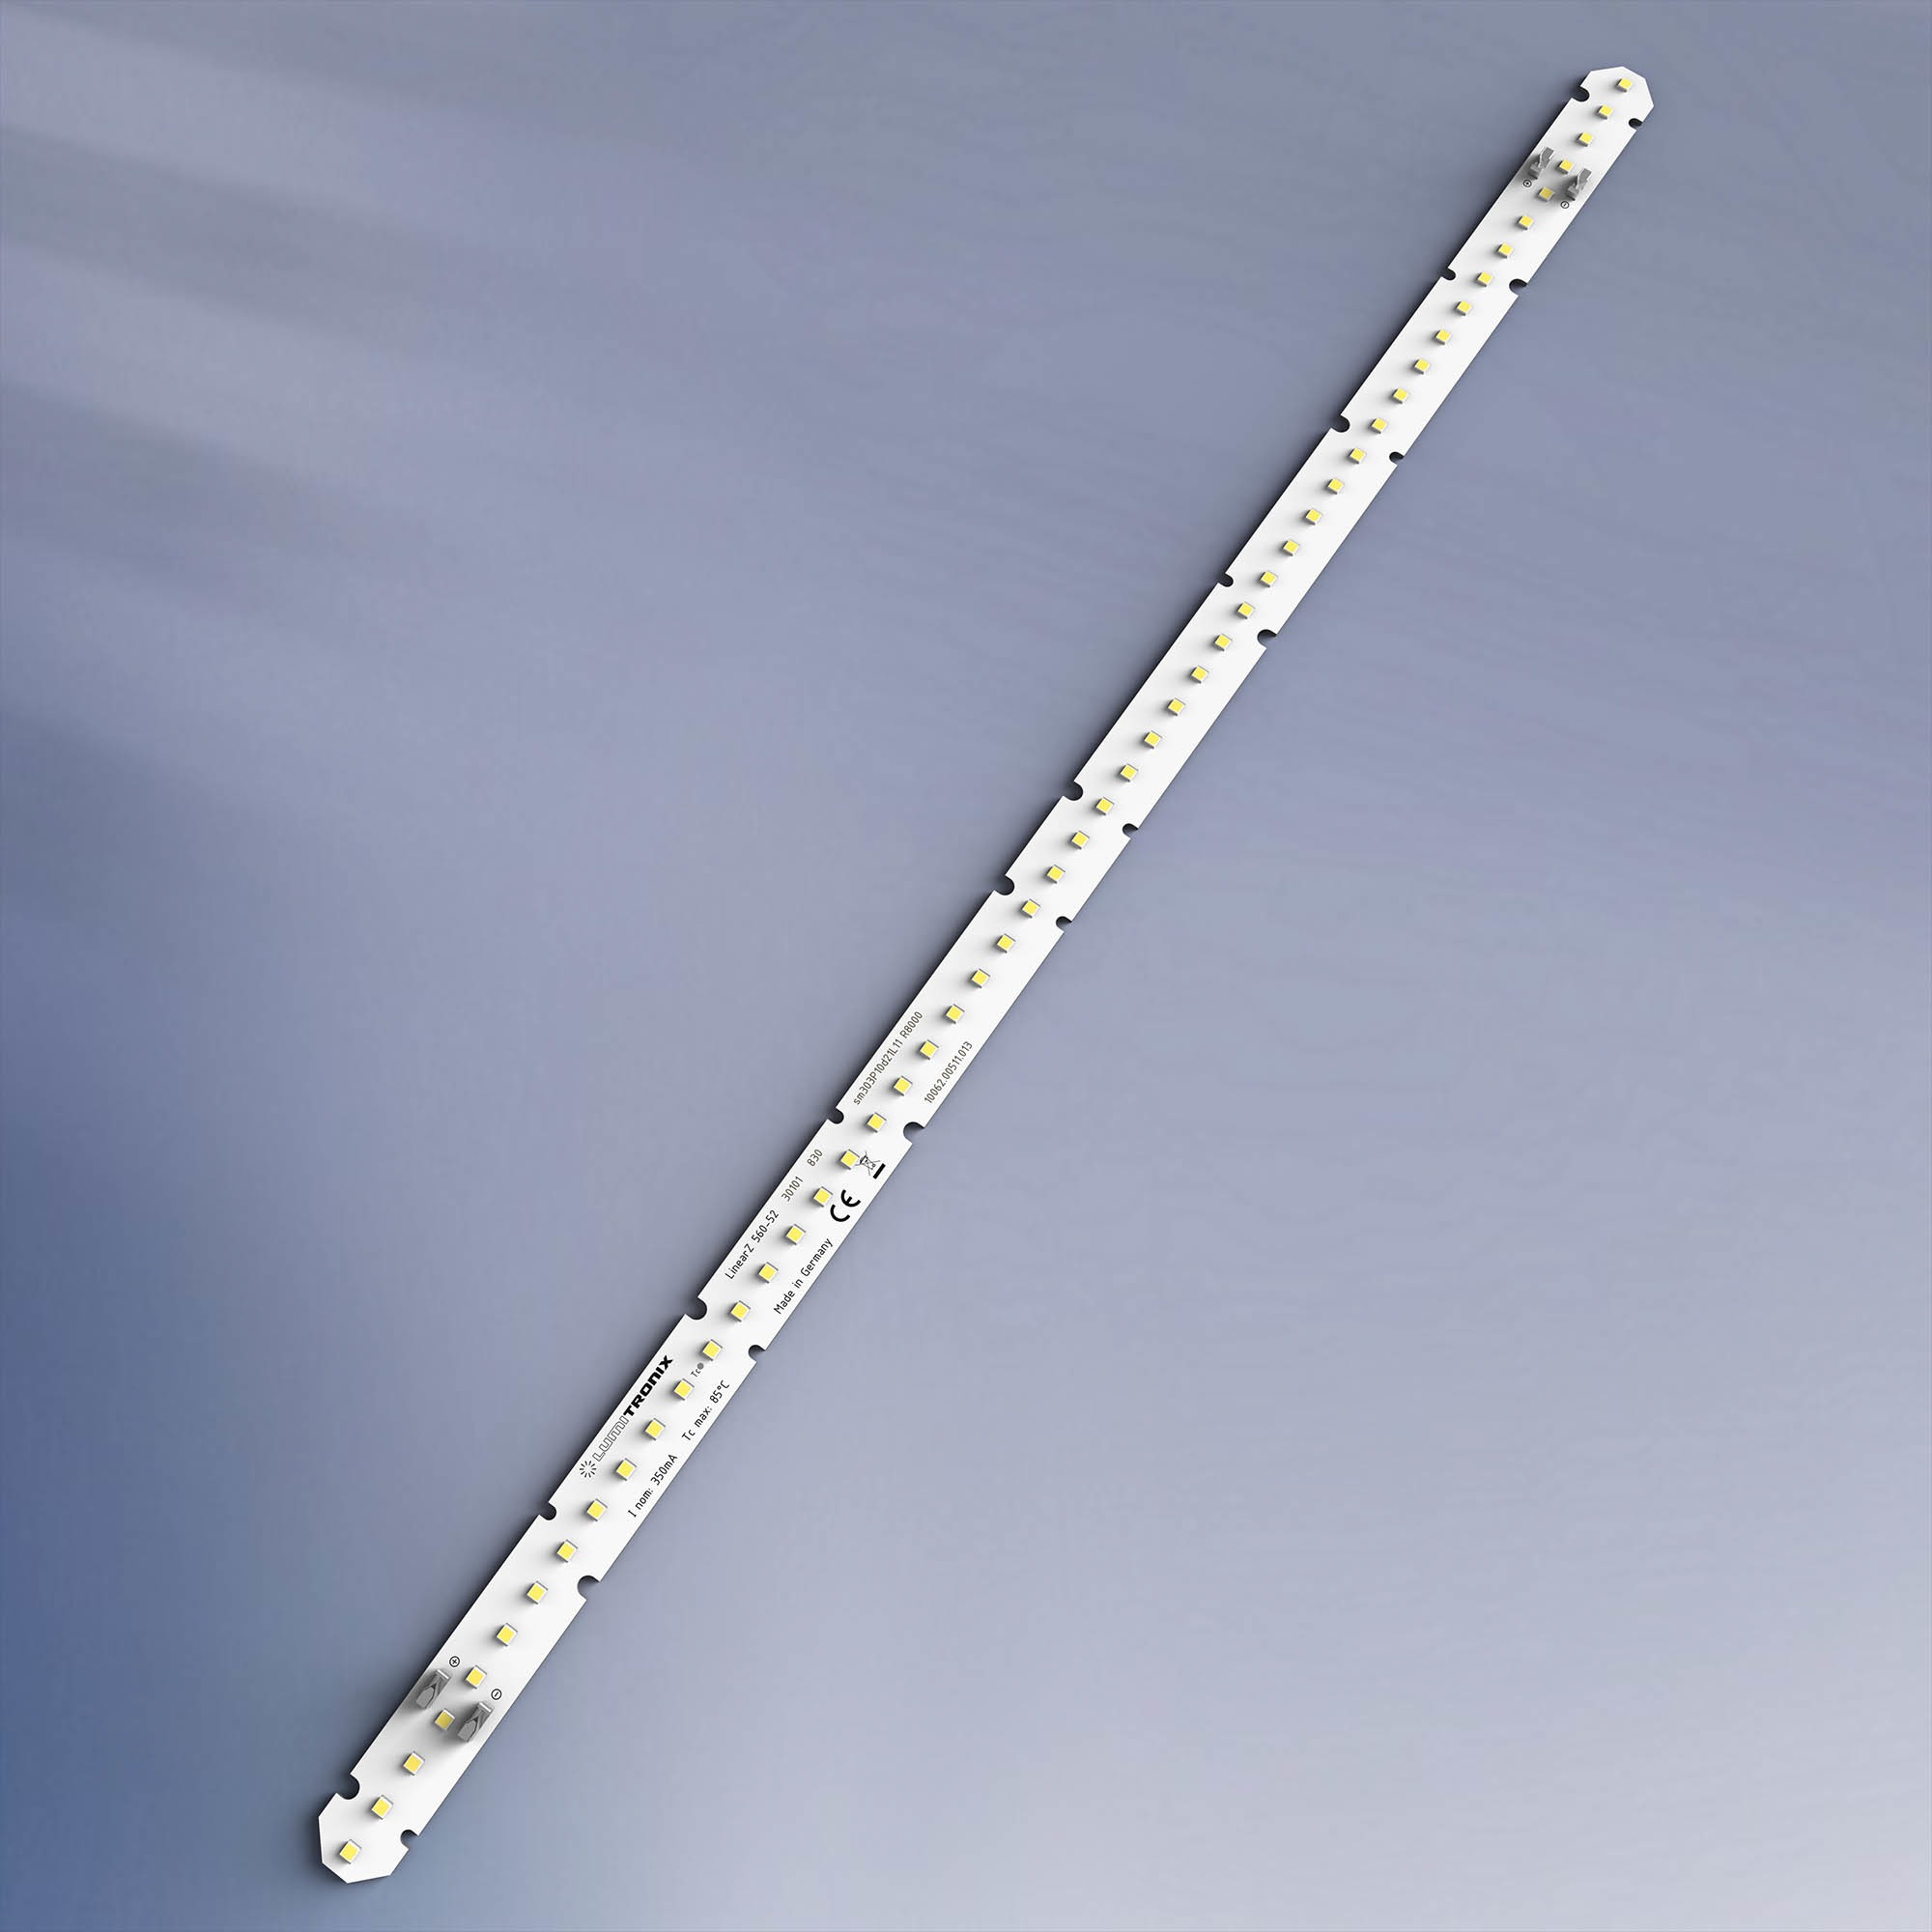 LumiBar-52-RSP Horticultura Nichia Rsp0a tira LED Zhaga blanco cálido 3000K 25PPF 1600lm 350mA 37.5V 52 LEDs 56cm módulo (2858lm/m 24W/m) 